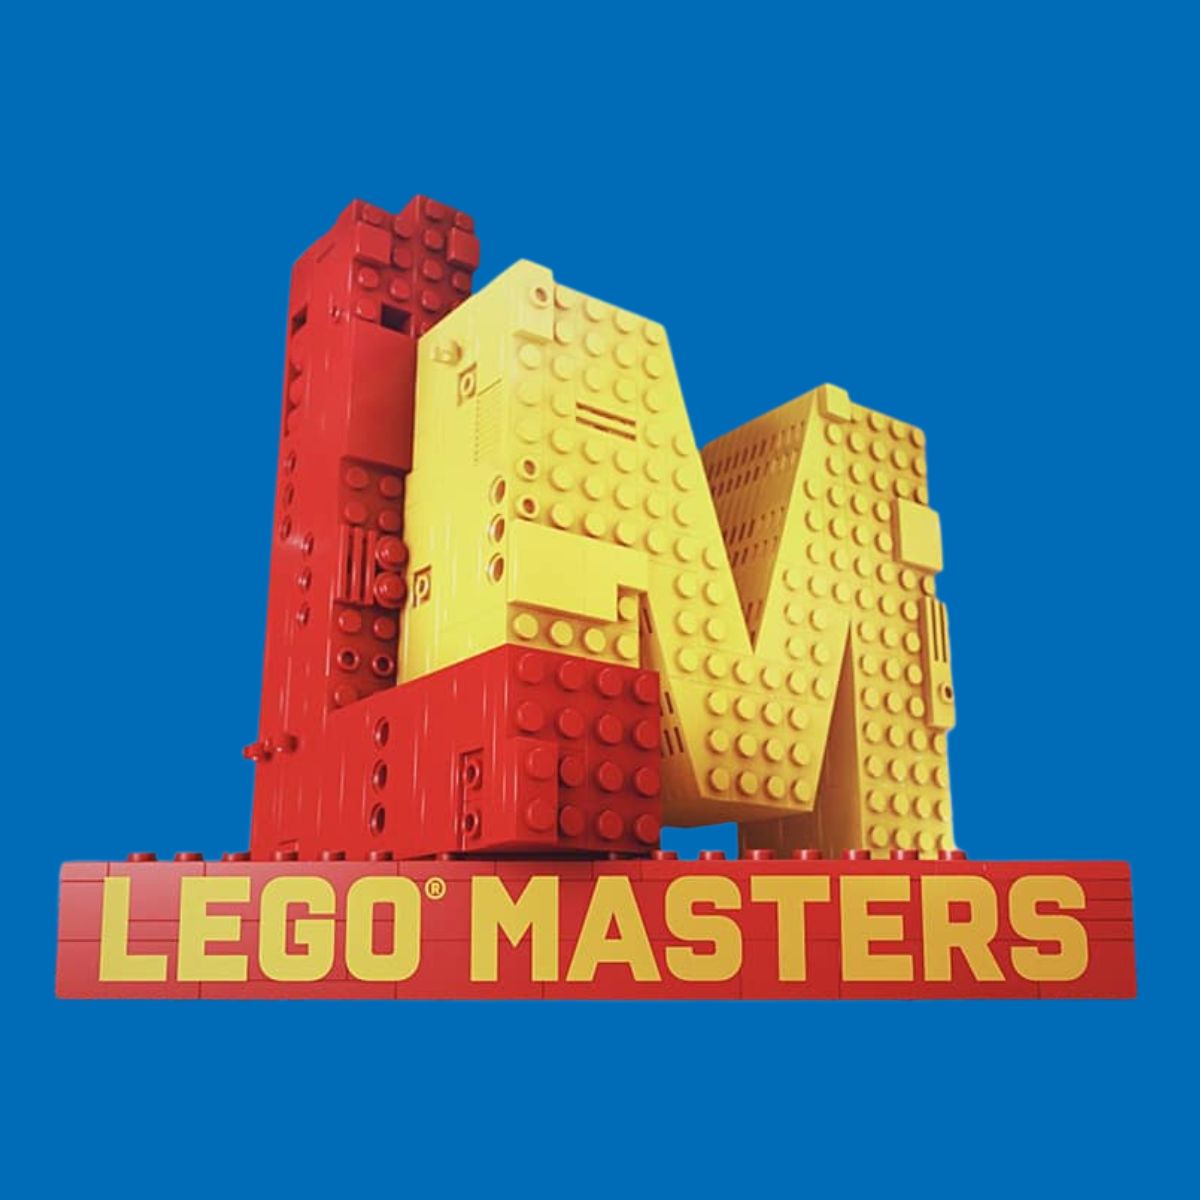 LEGO Masters Square